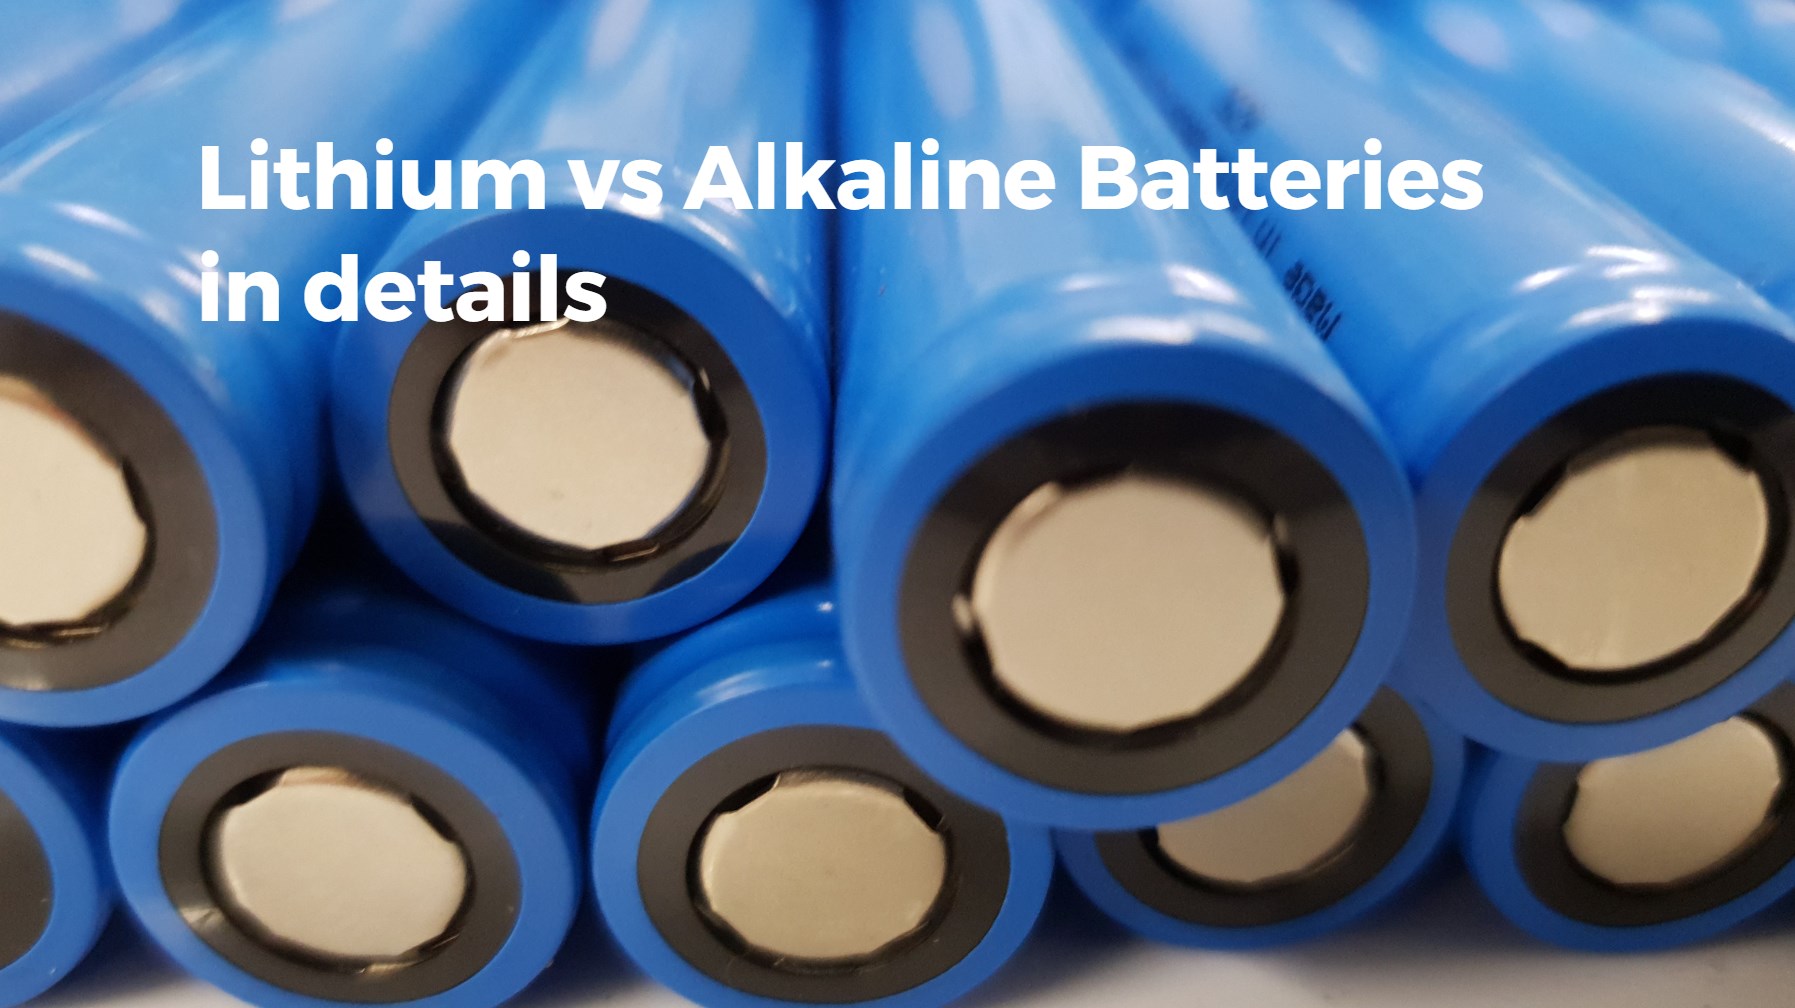 Alkaline vs Lithium batteries in materials